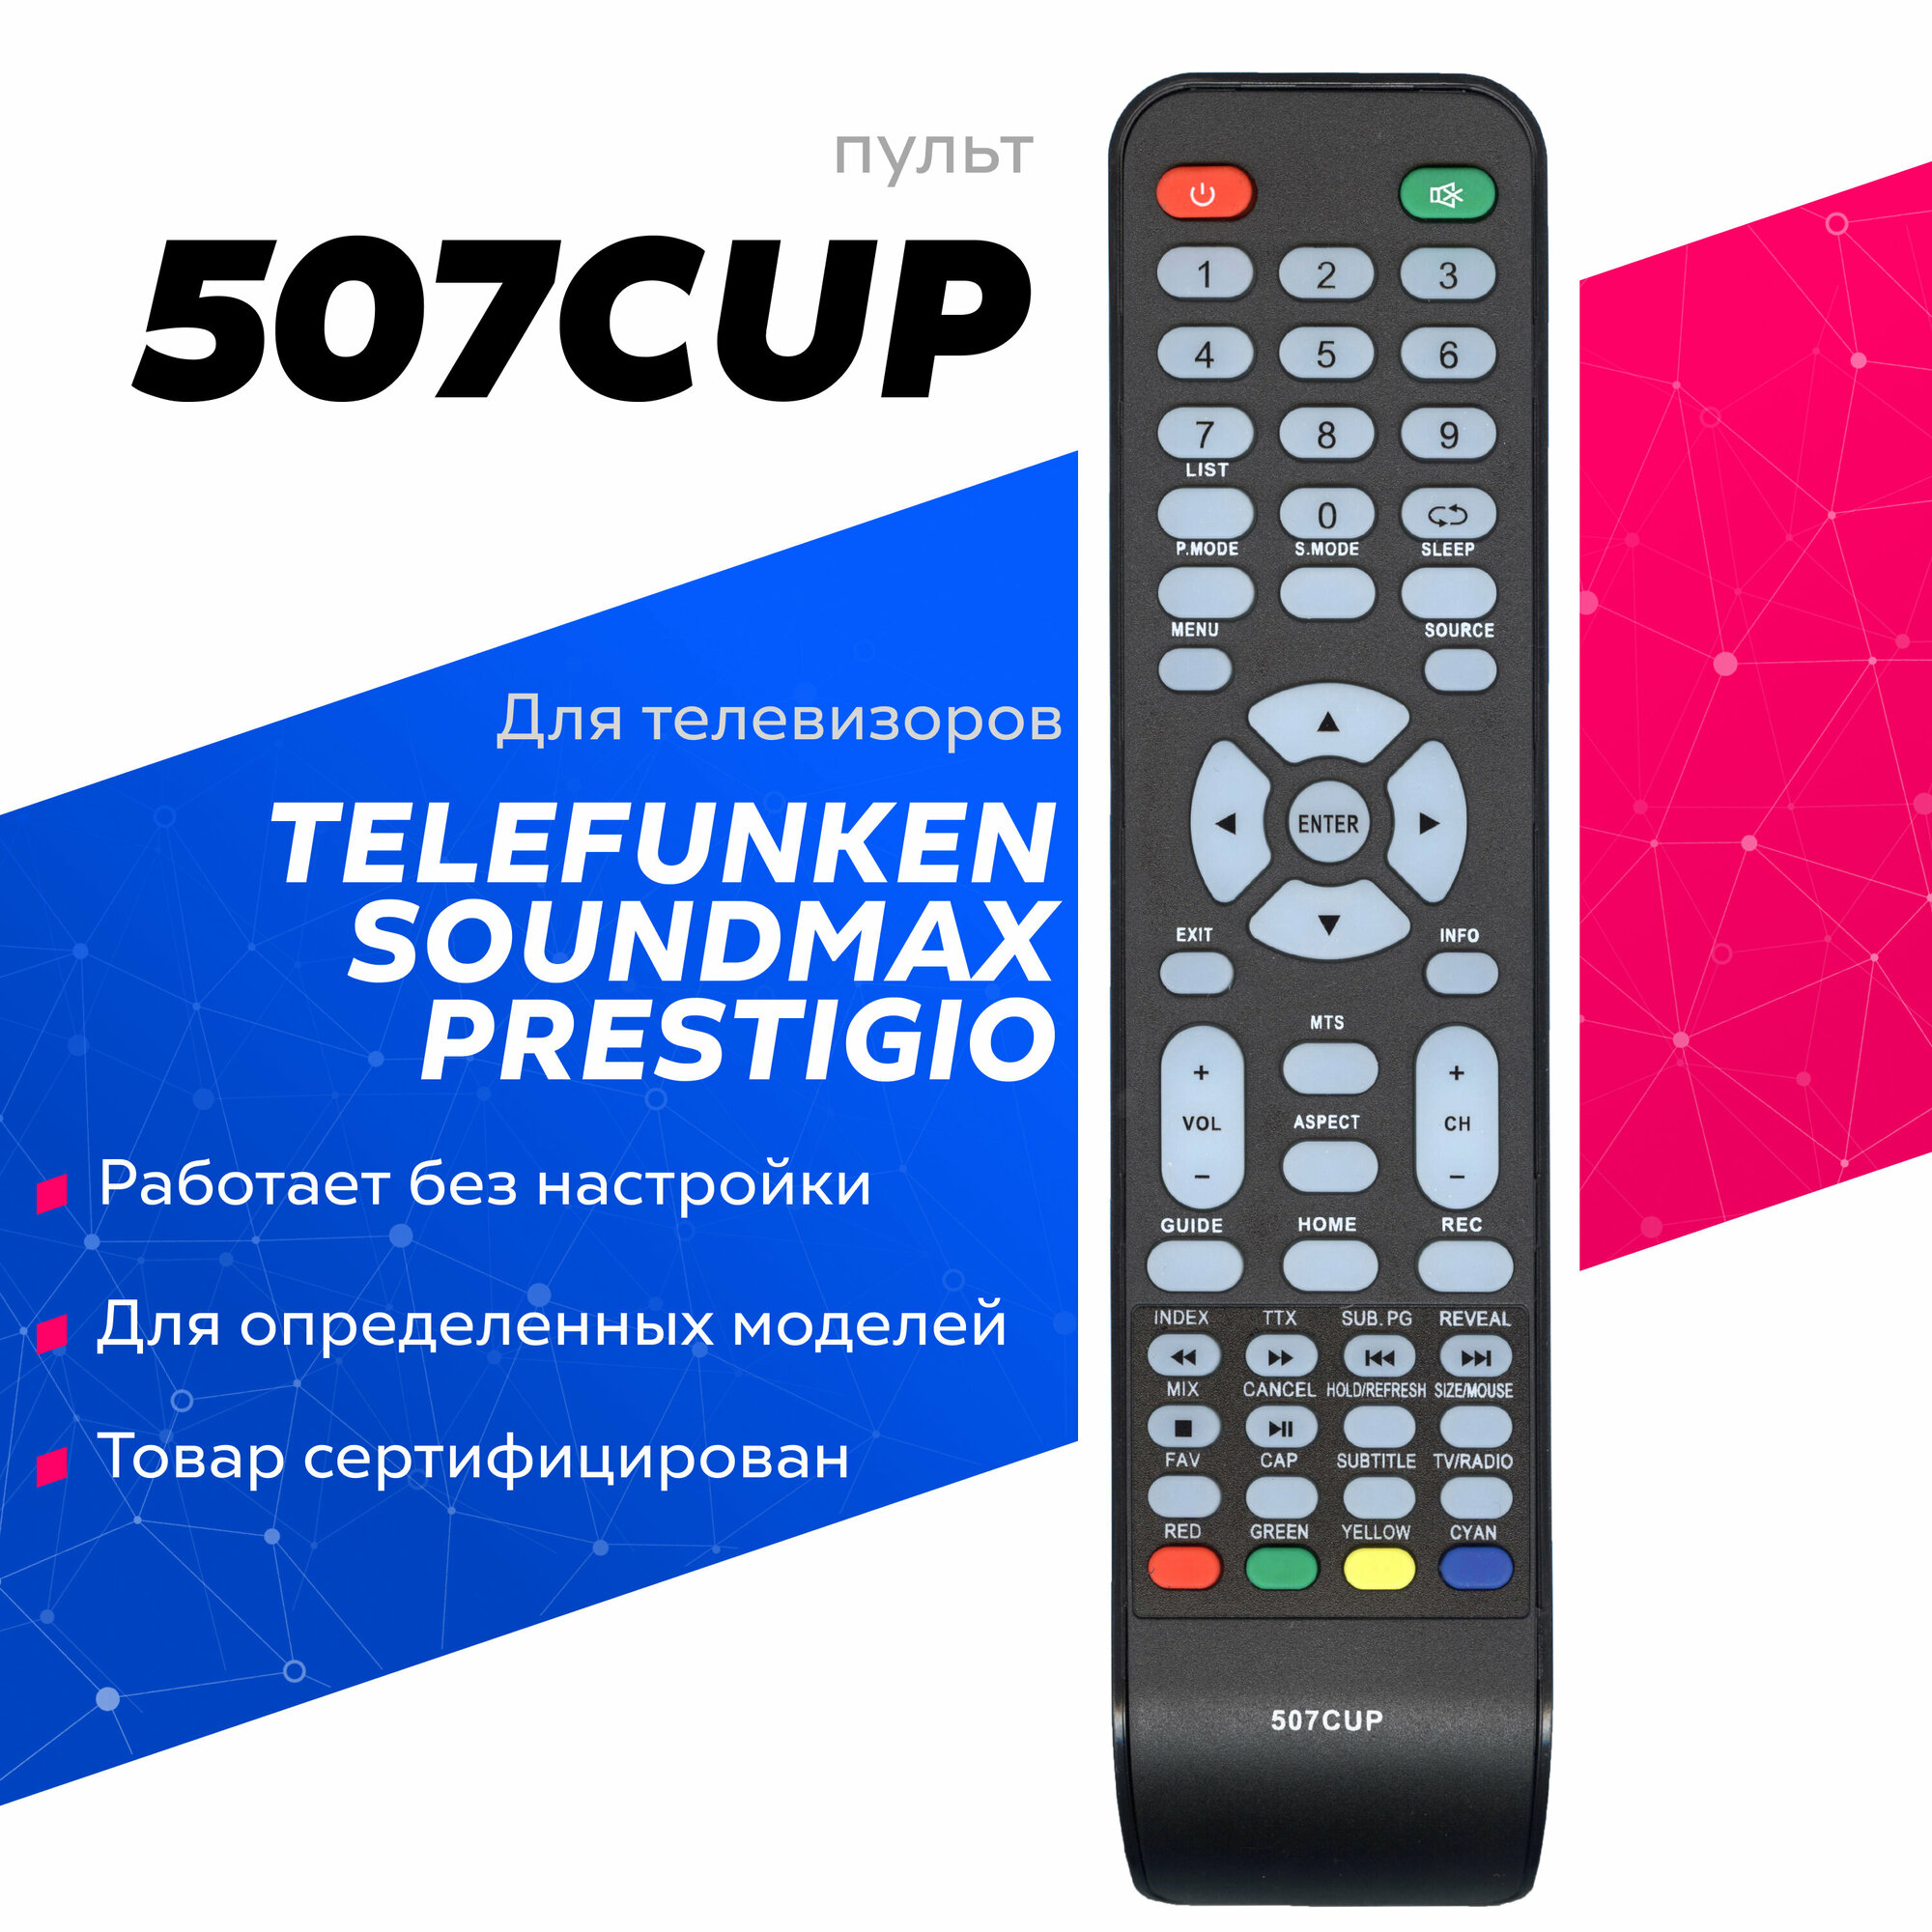 Пульт HUAYU 507 CUP для телевизора Telefunken